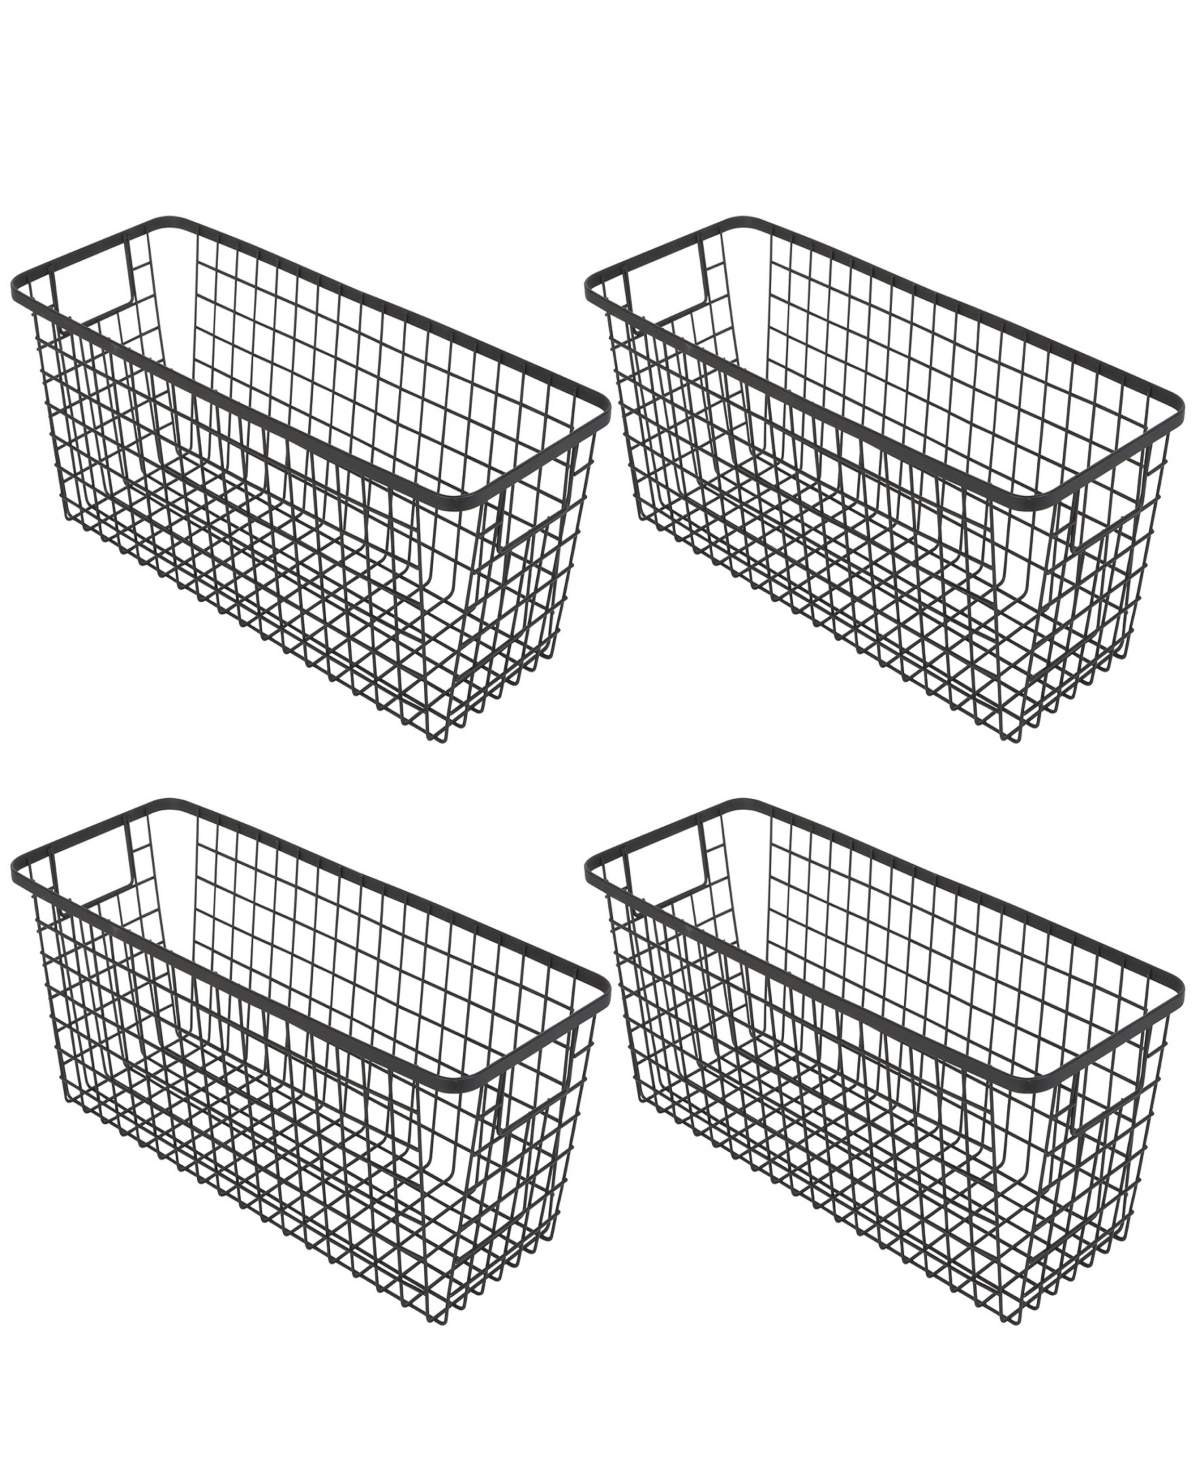 Nestable 6" x 16" x 6" Basket Organizer with Handles, Set of 4 - Black